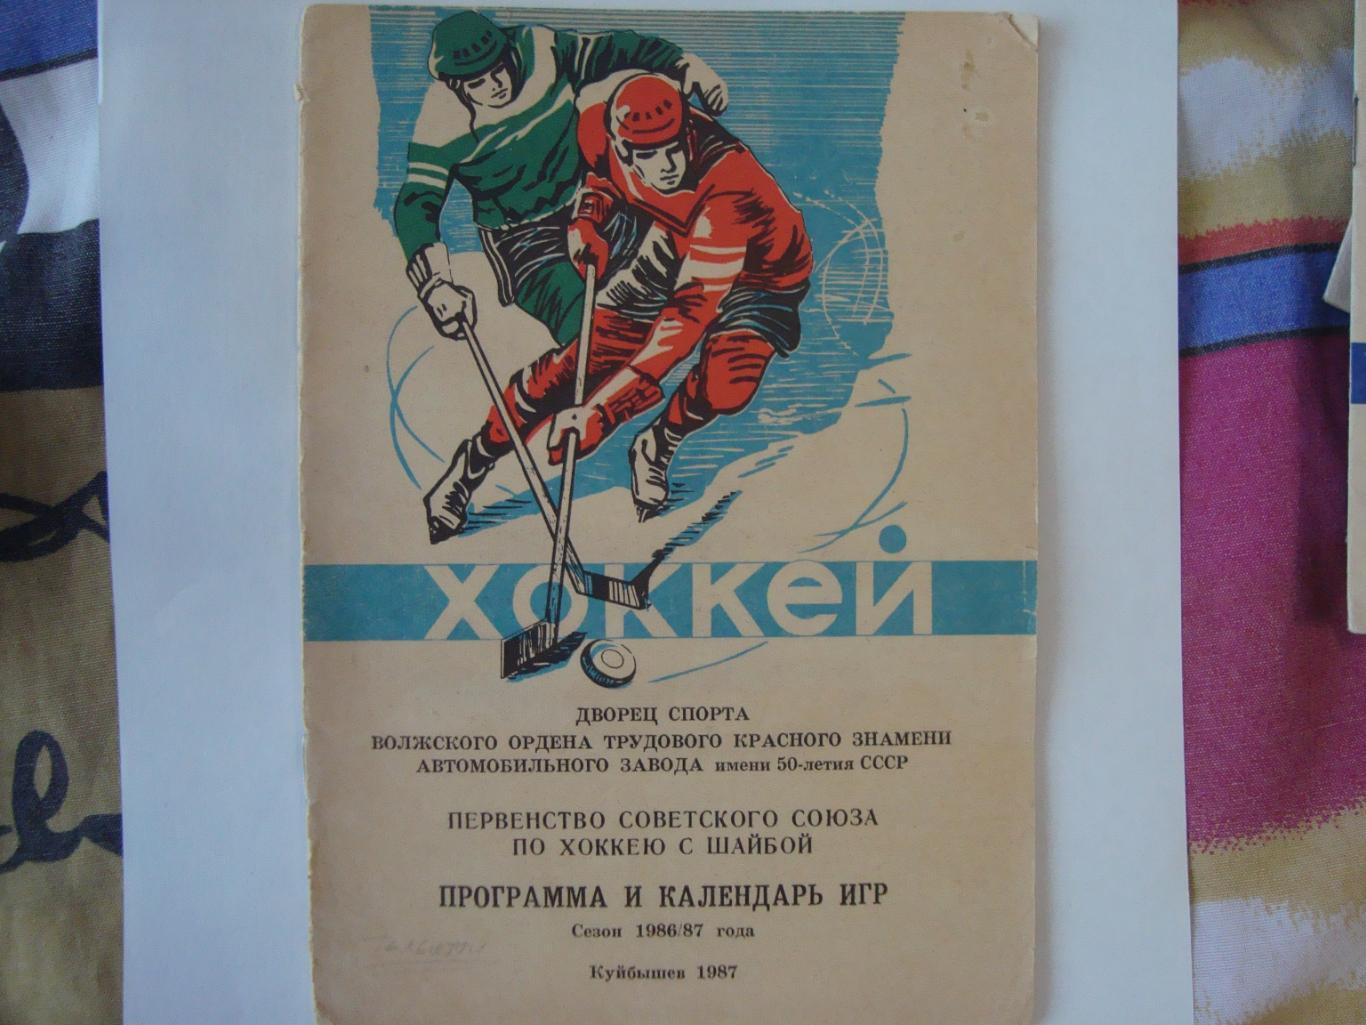 Хоккей. Программа и календарь игр. Куйбышев. 1986/87